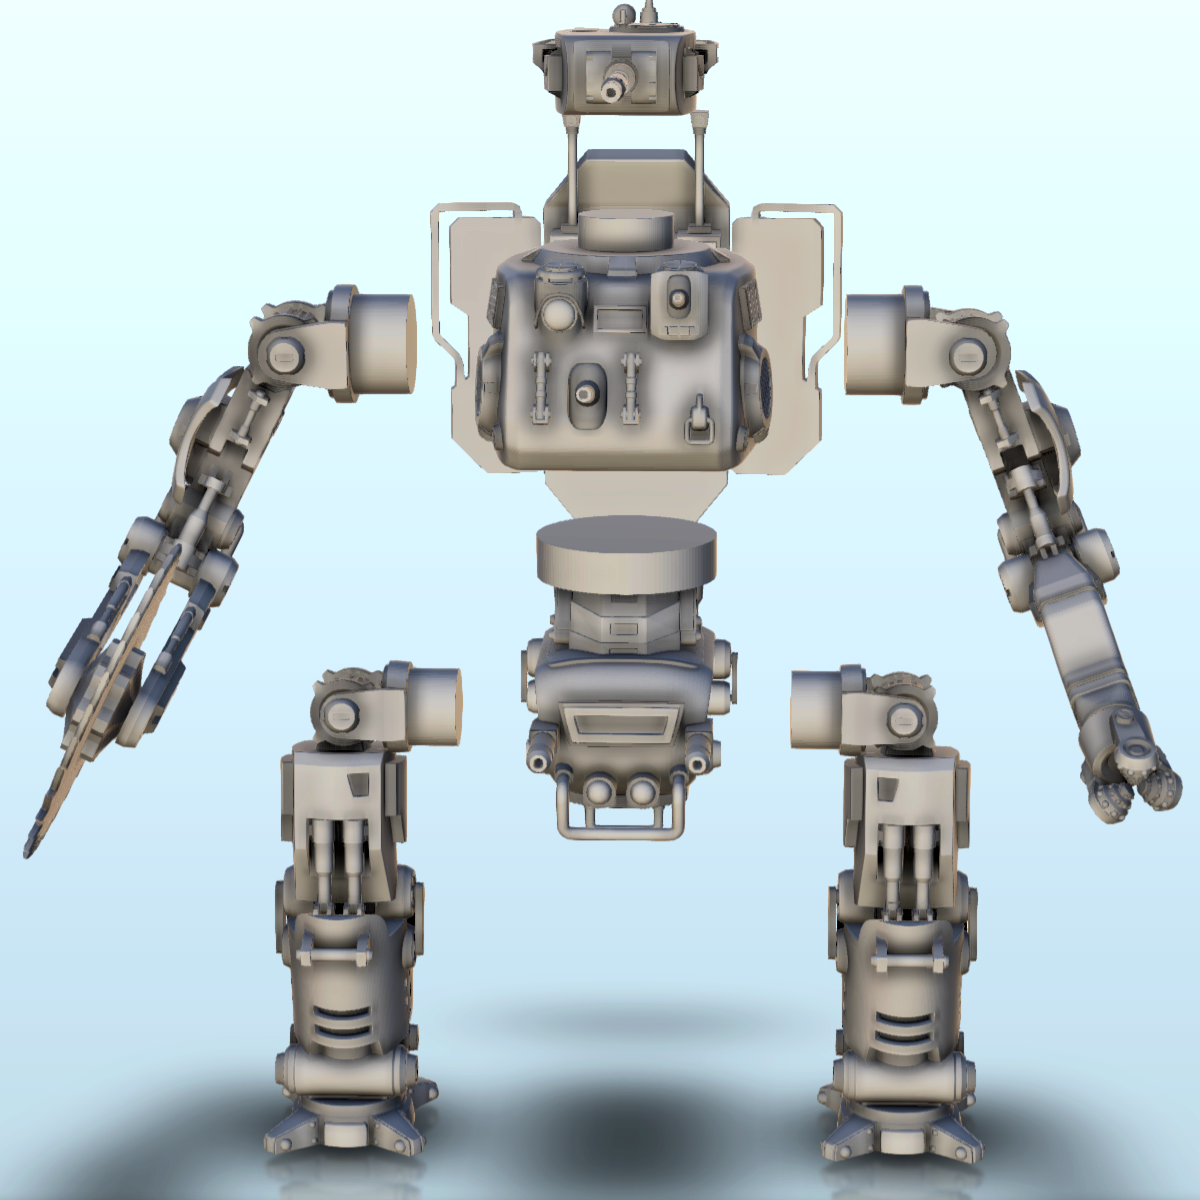 Zihaldin combat robot (23) - sci-fi science fiction future 4, 3D models  download